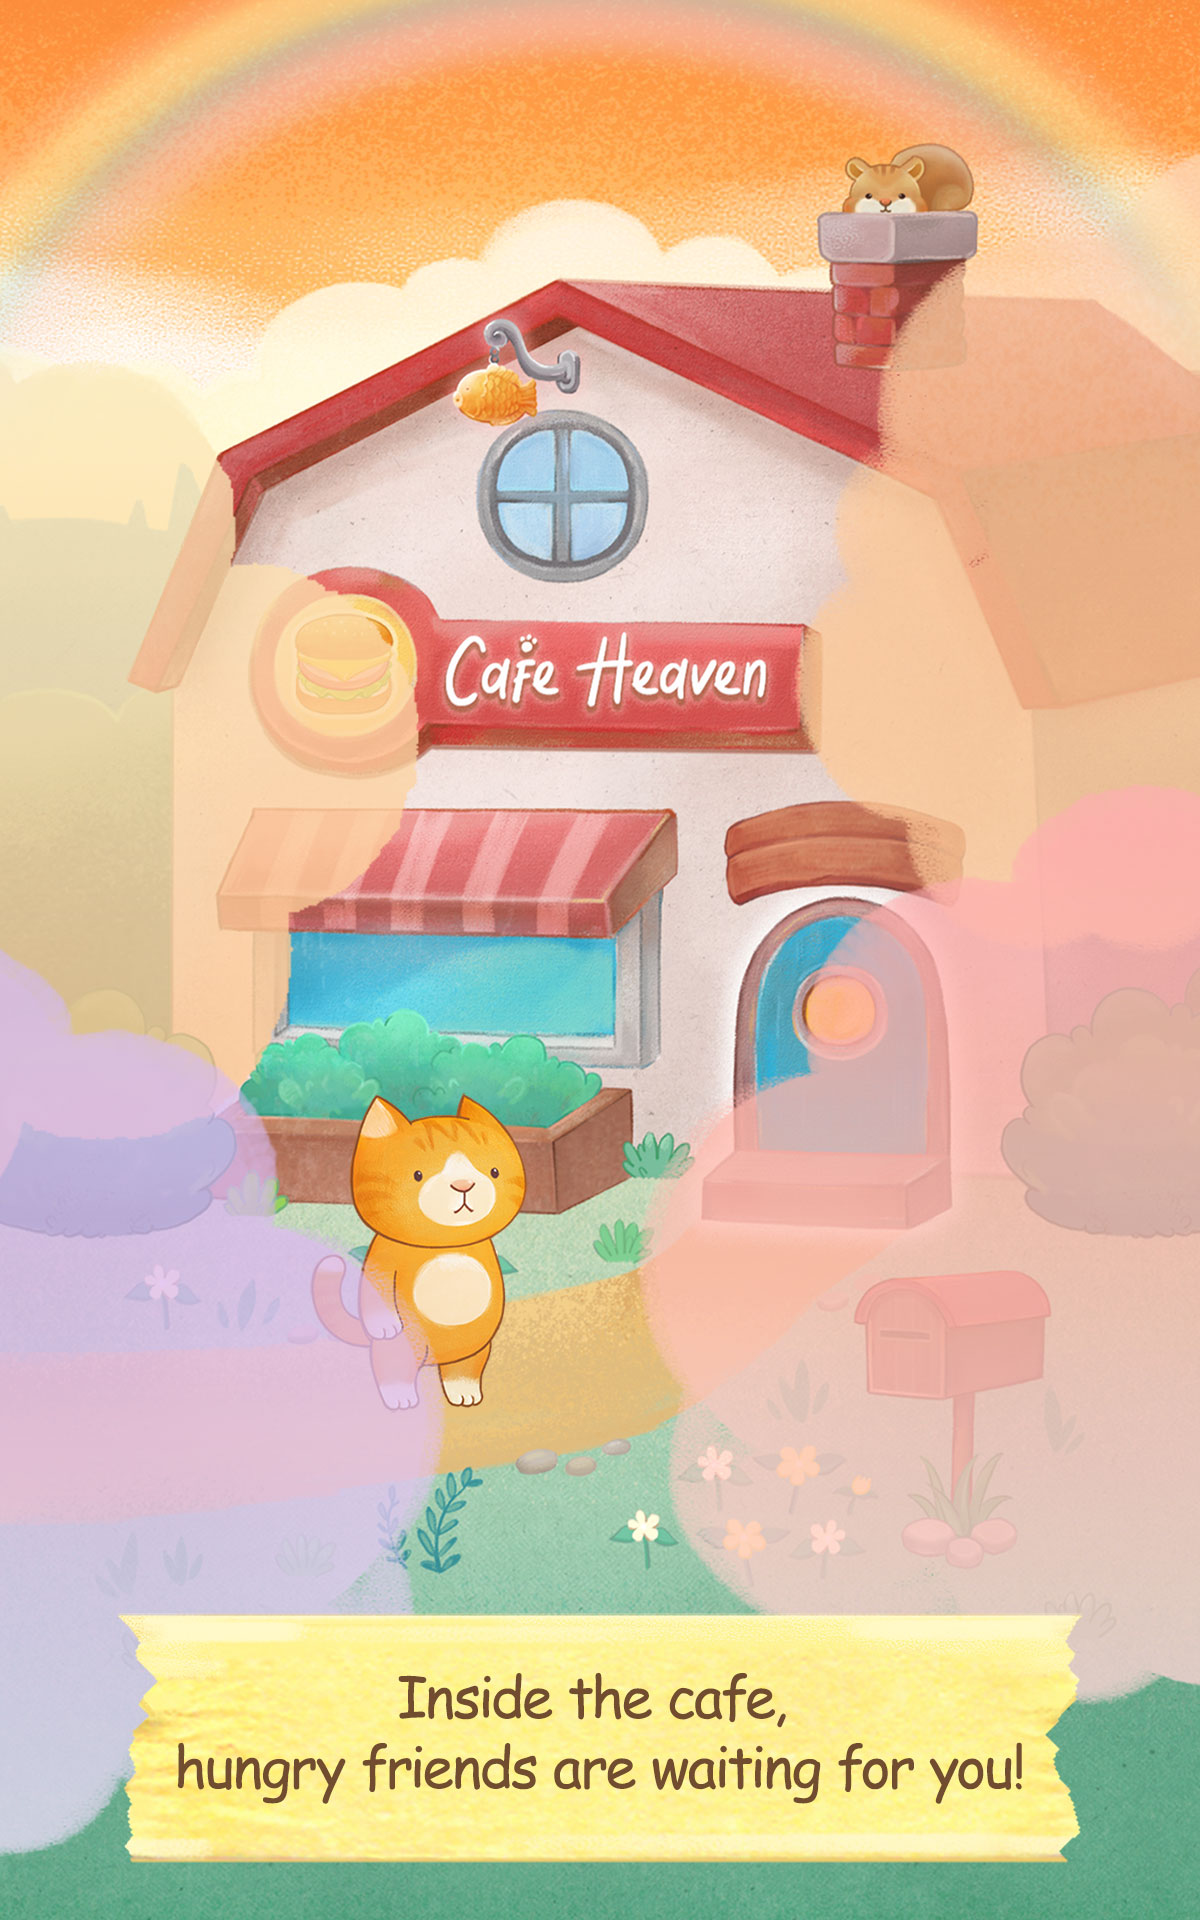 Scarica Cafe Heaven - Cat's Sandwich gratis per Android.